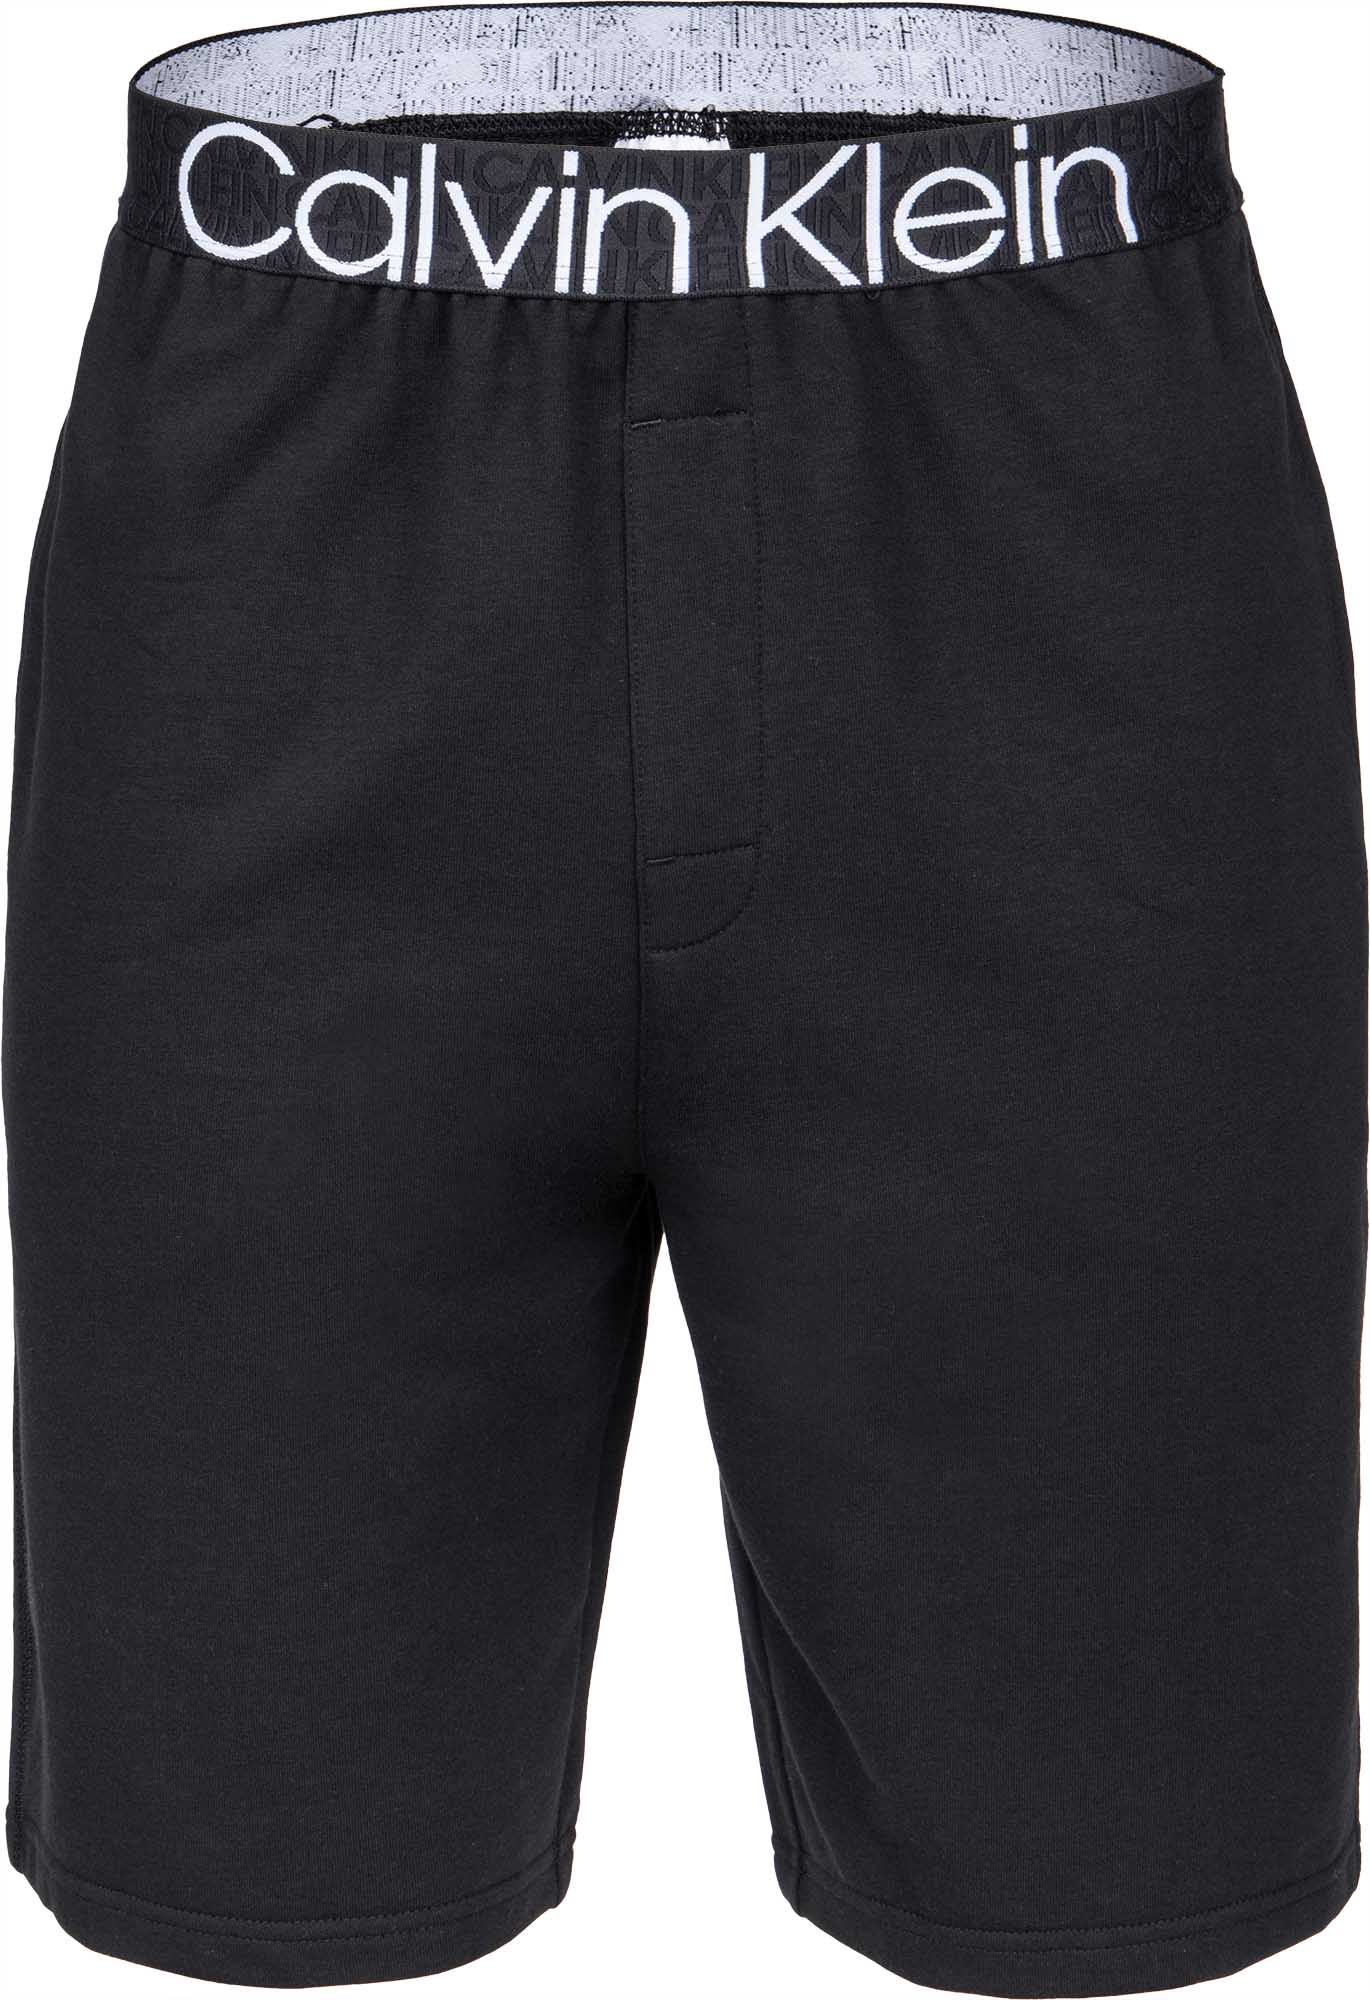 Men's sleeping shorts